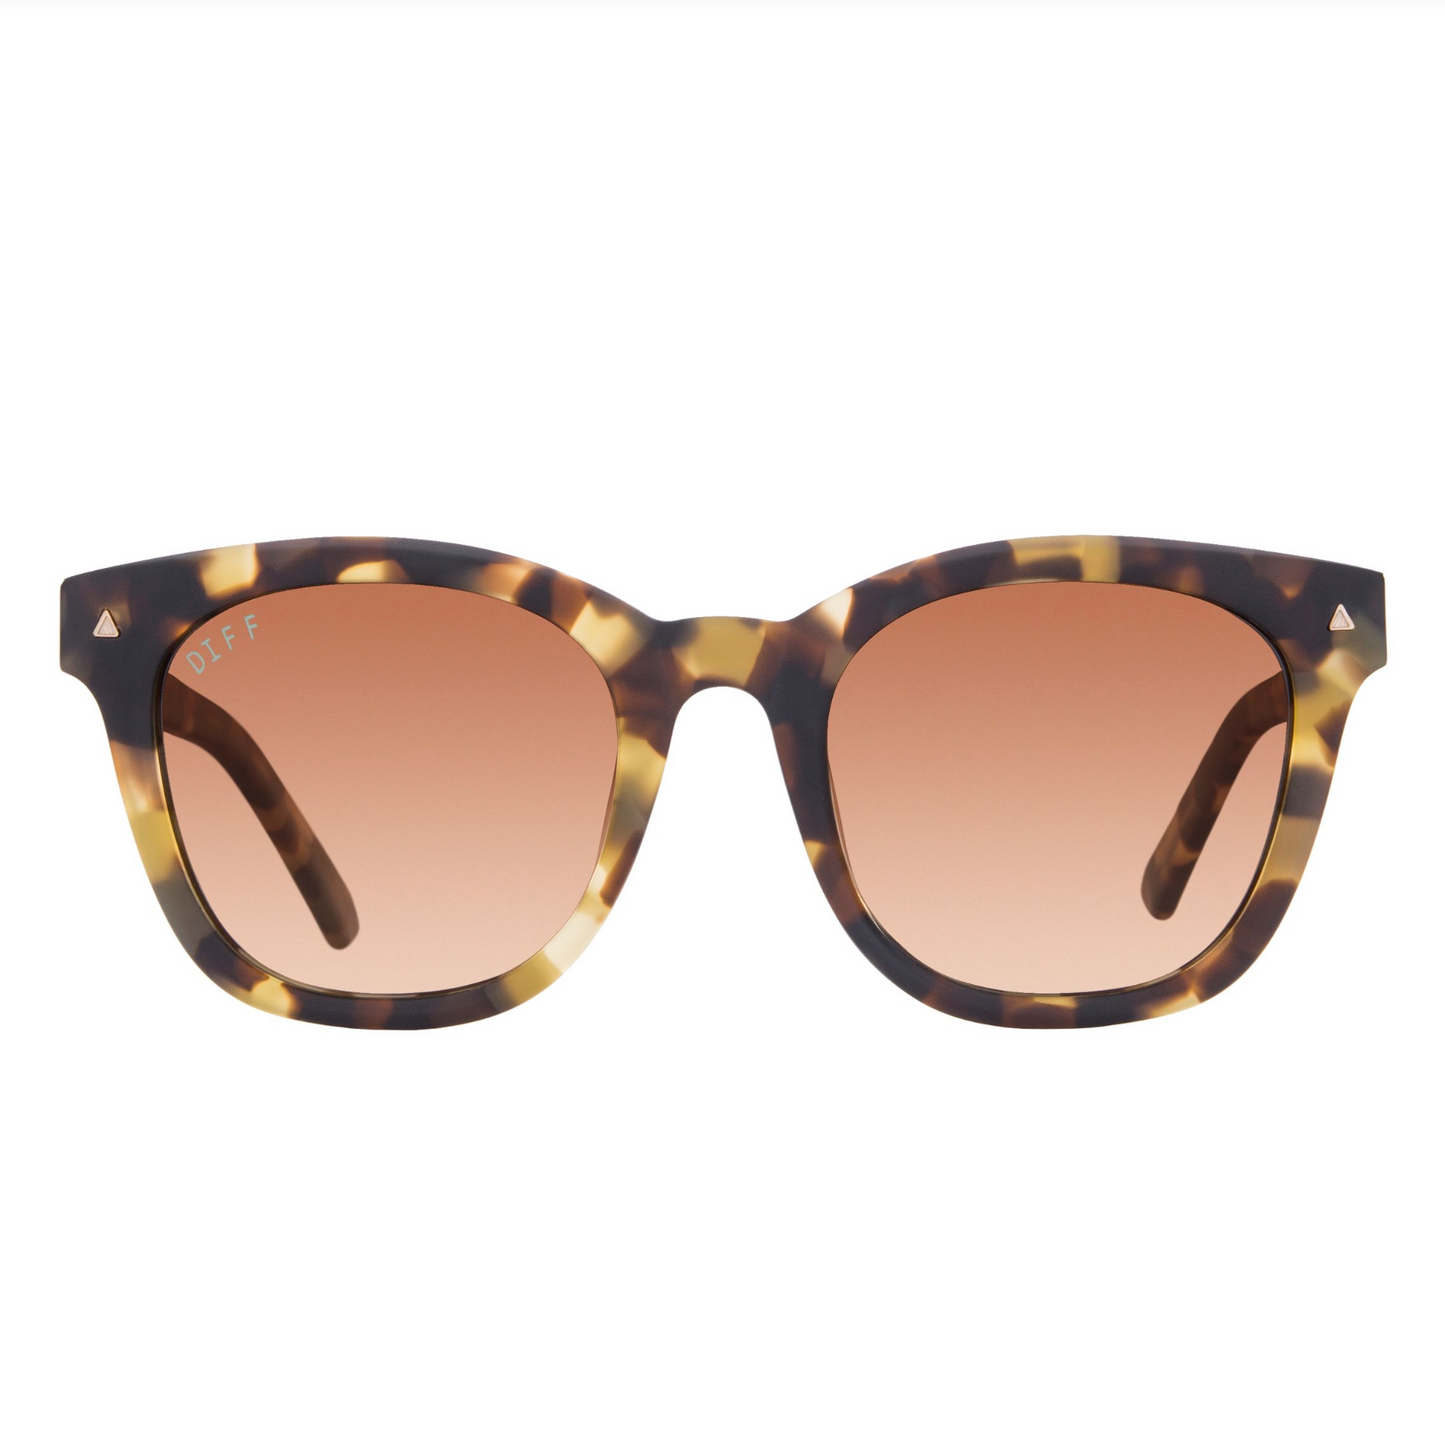 DIFF Eyewear - Ryder - Matte Moss Havana Brown Gradient Polarized Sunglasses